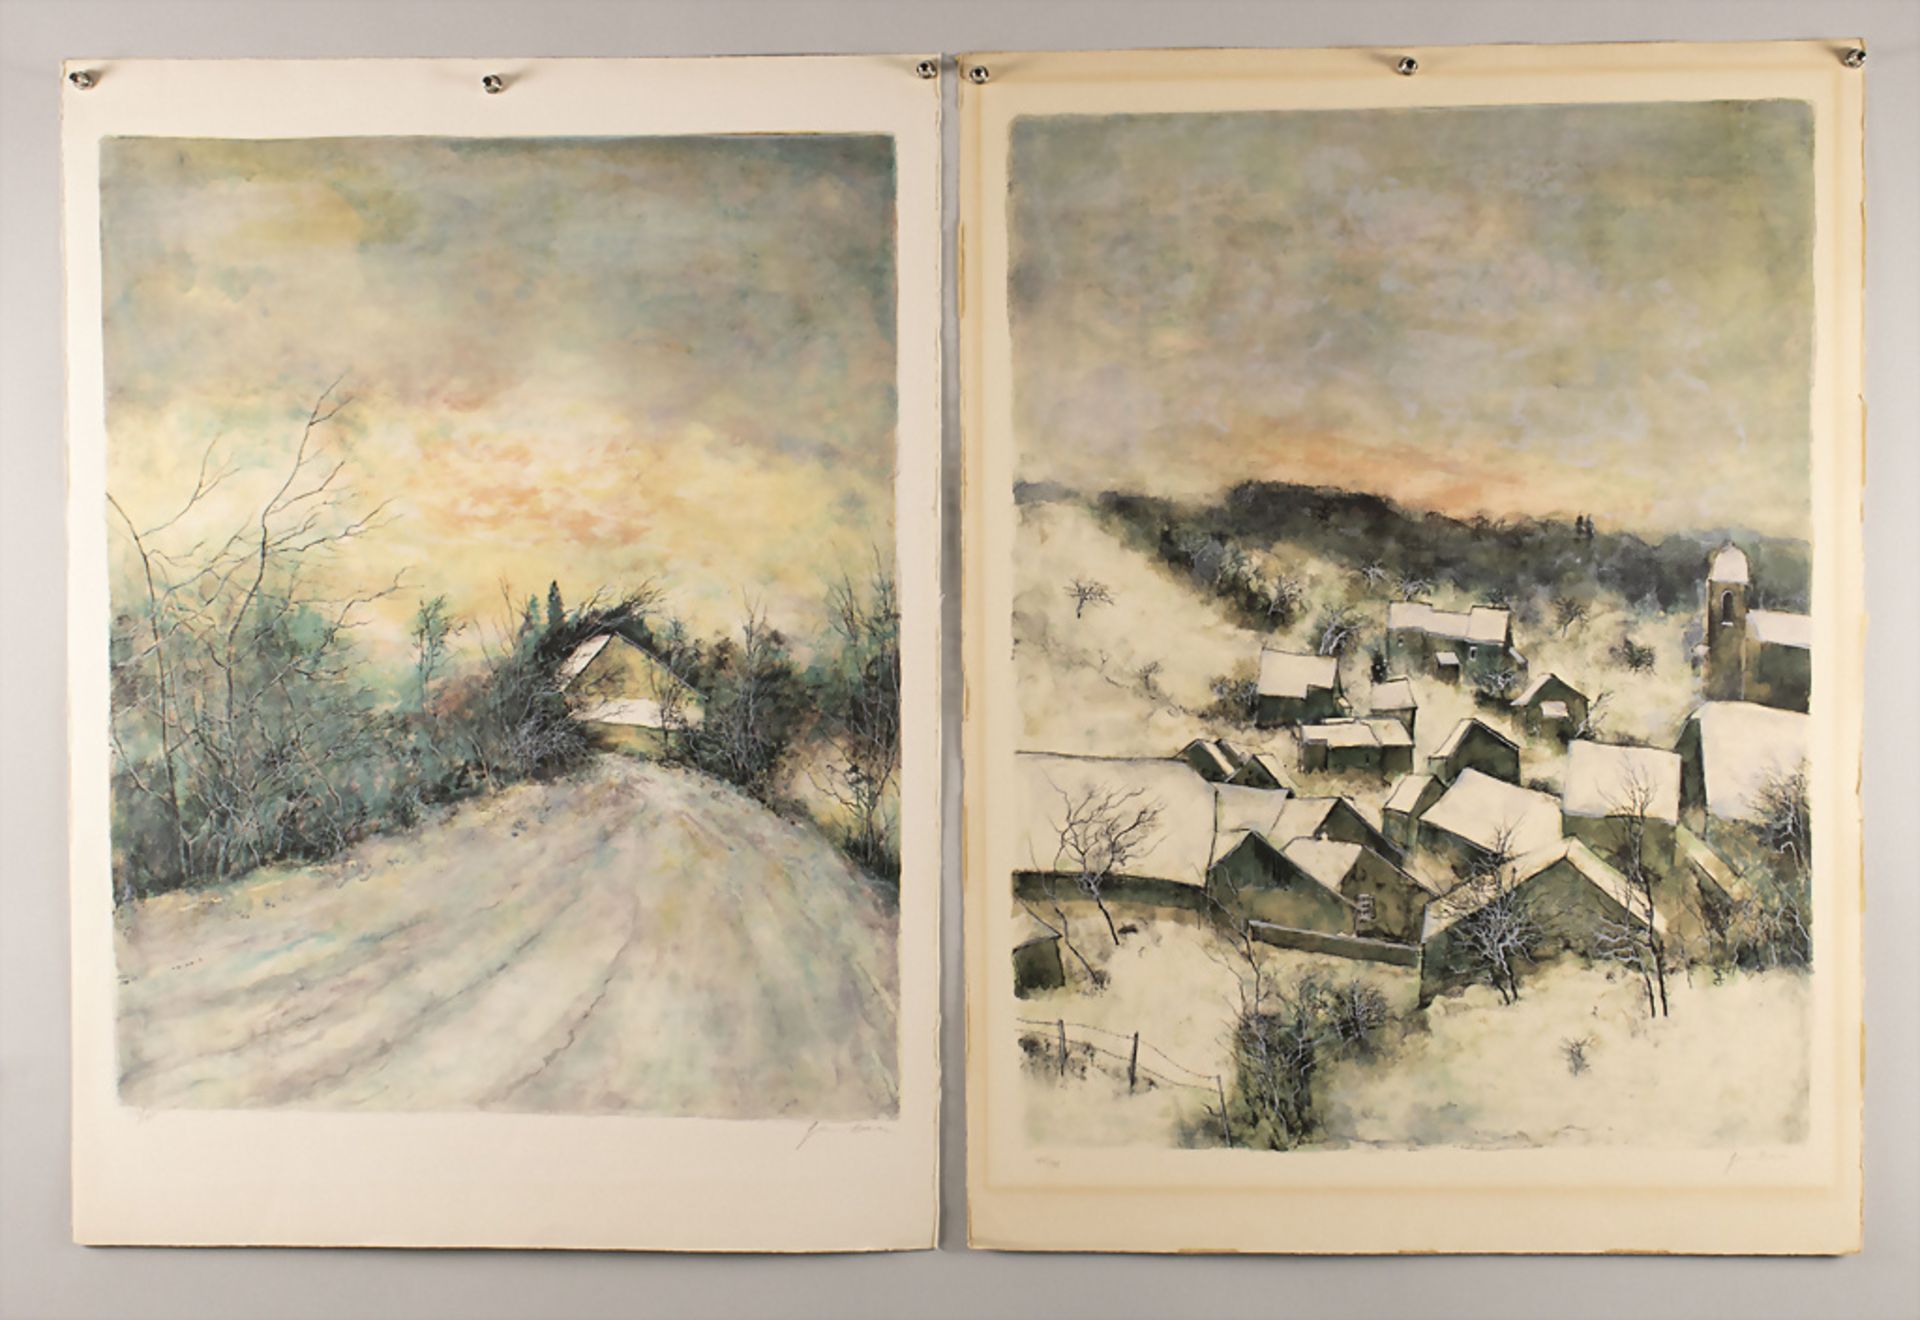 Bernard GANTNER (1928-2018), Zwei Farblithographien 'Winter' / Two color lithographs 'Winter'